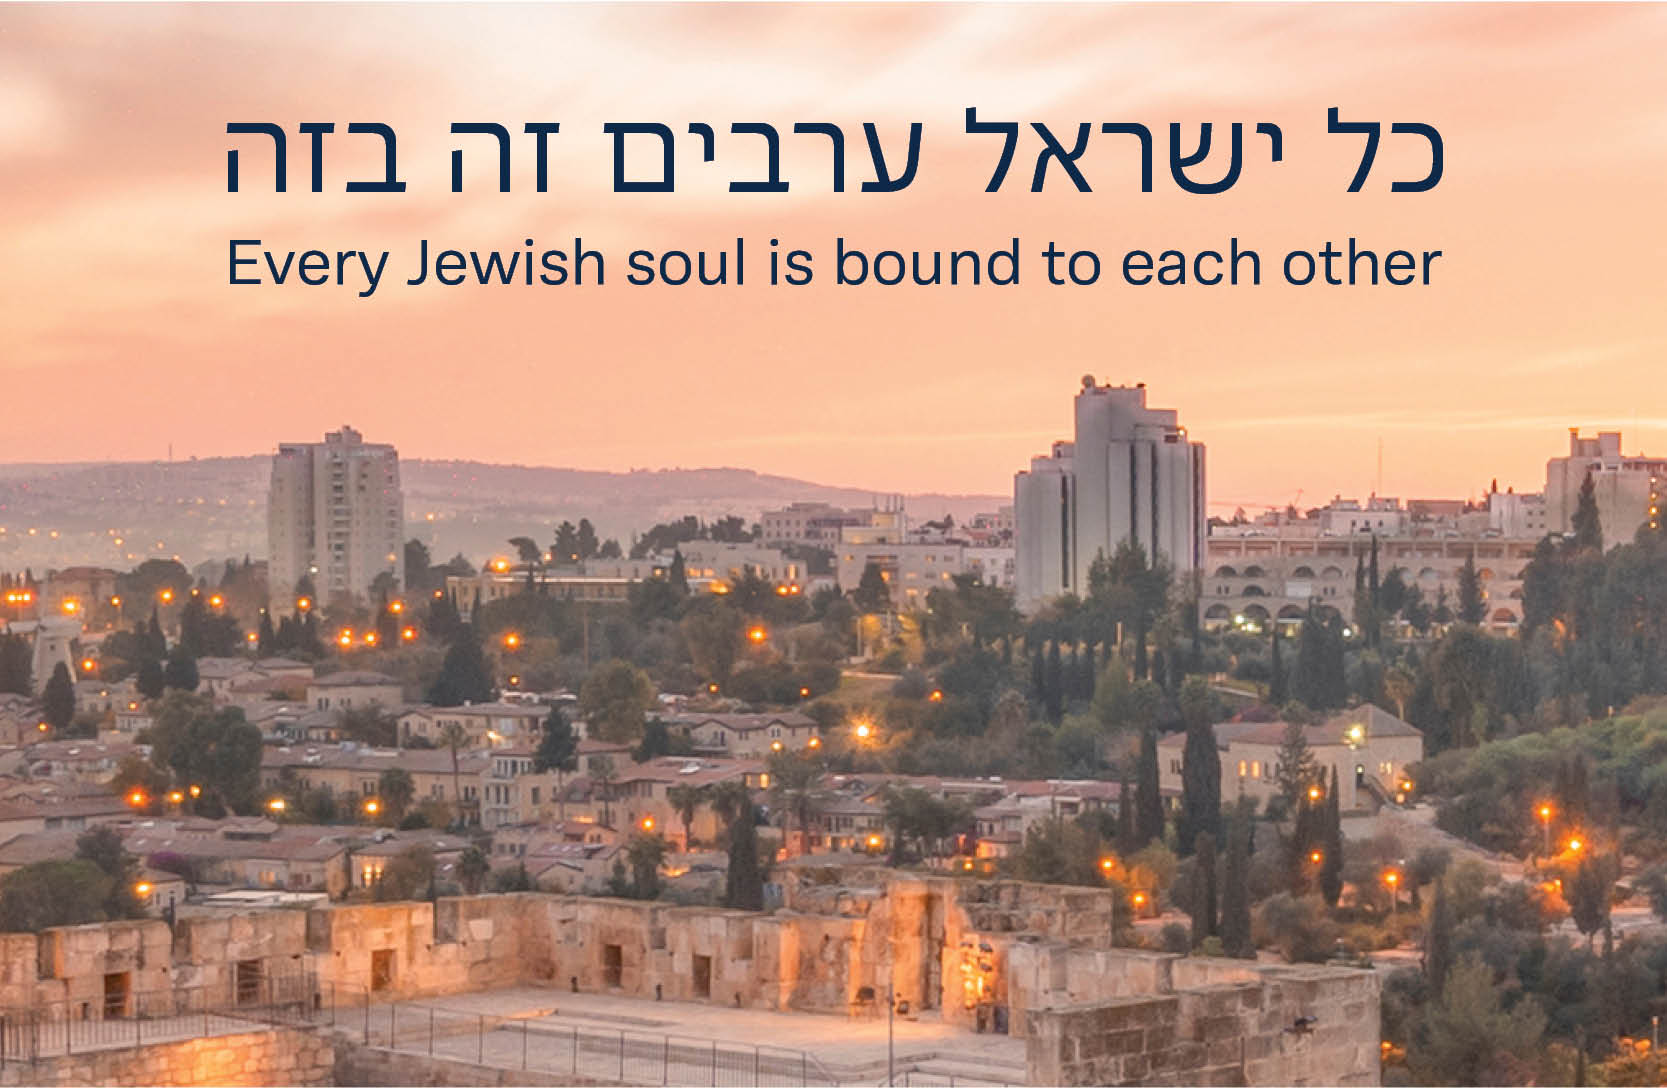 35 Years of Or Zarua: Strengthening K'lal Yisrael